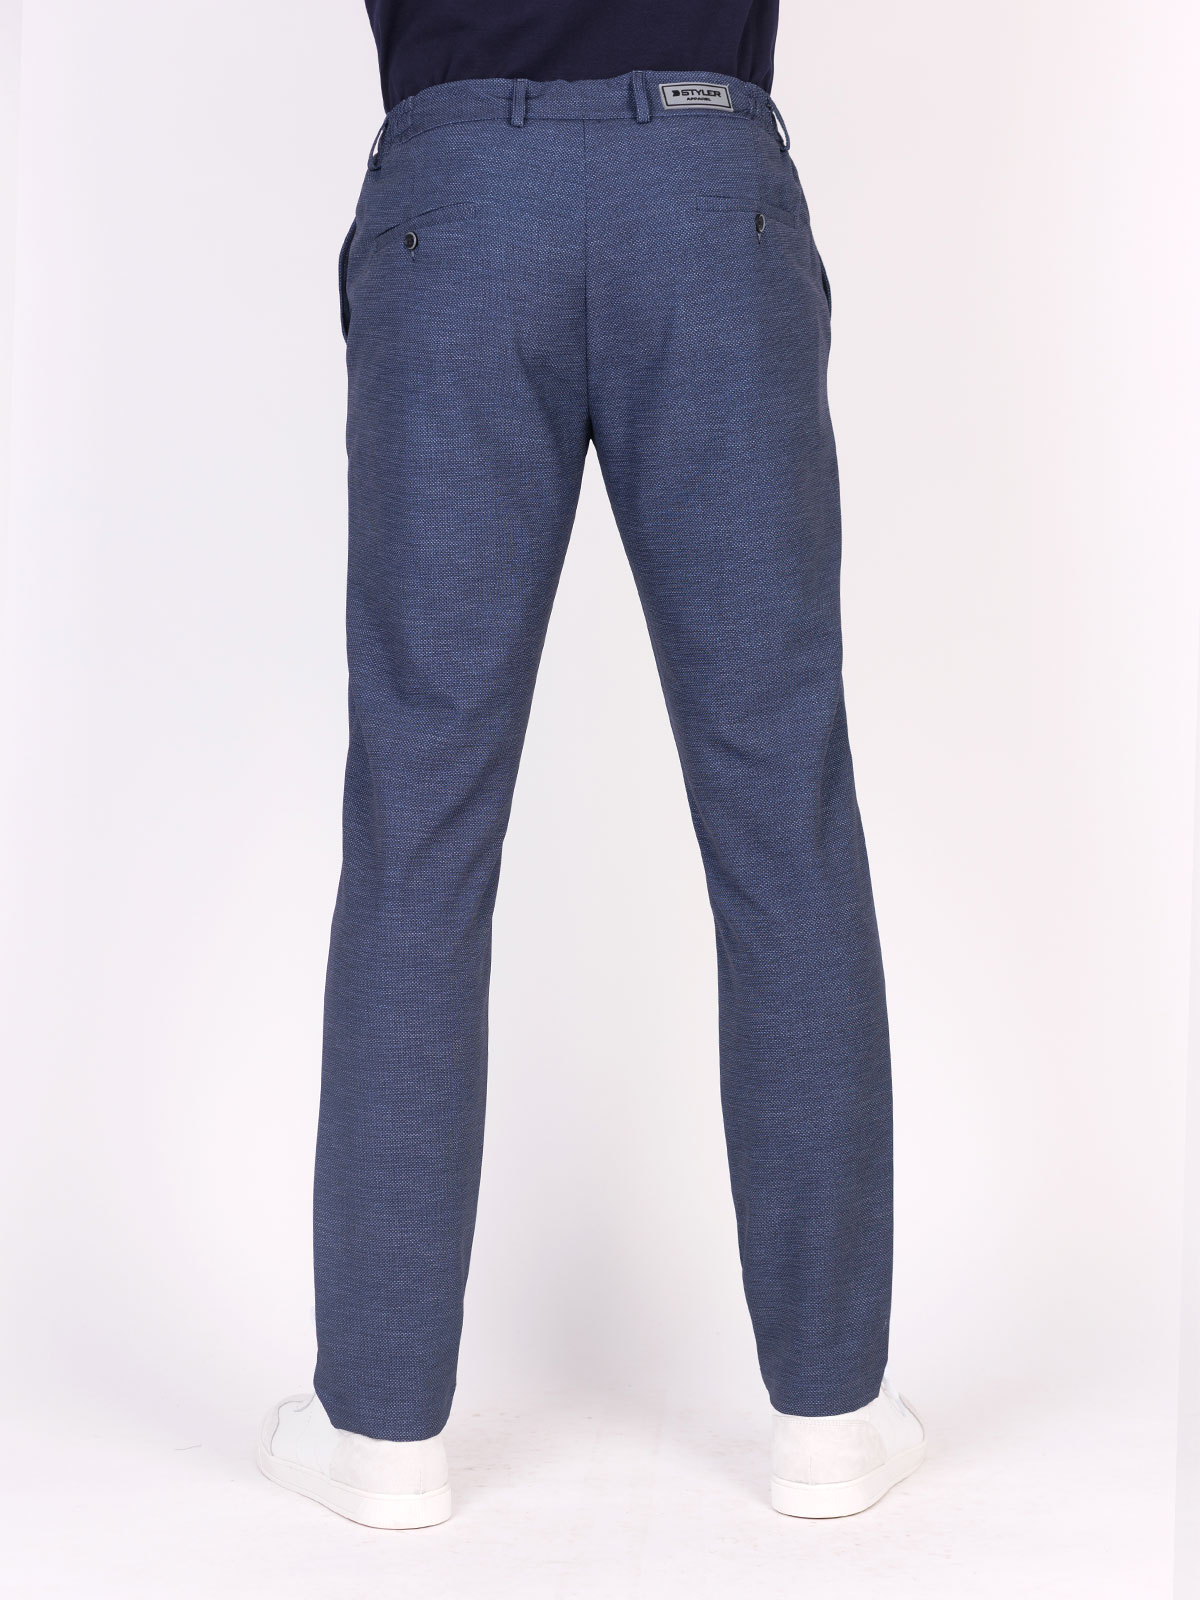 Sports pants dark blue melange - 29009 € 55.12 img2